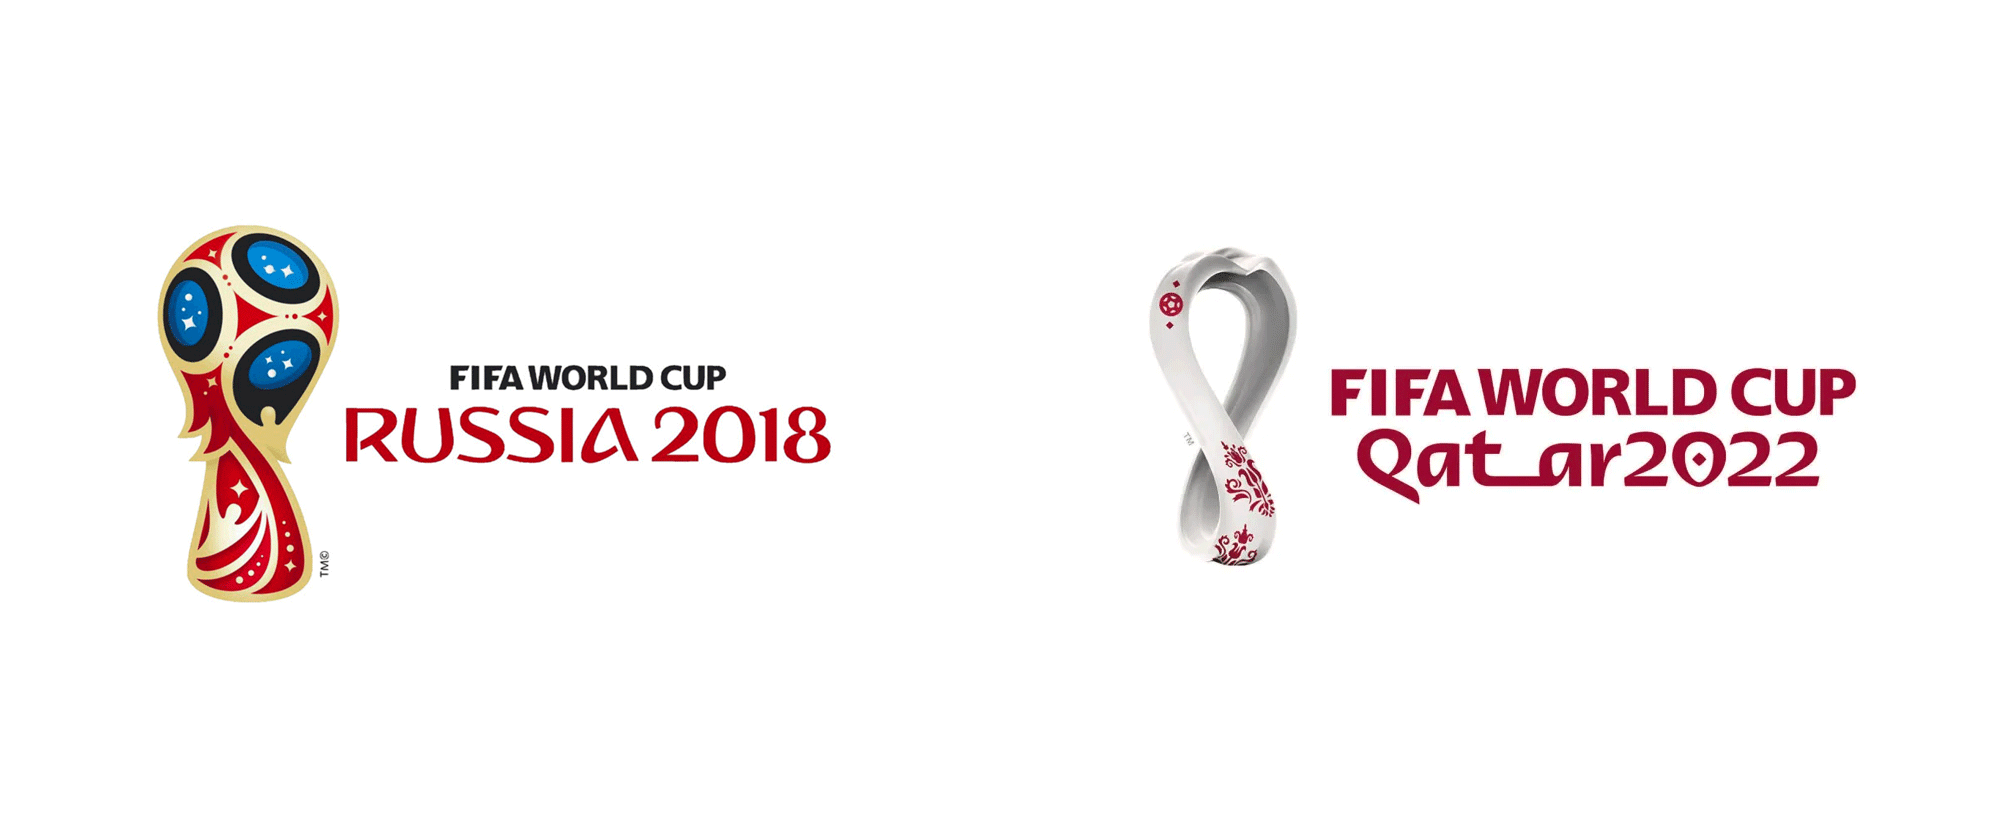 fifa world cup logo